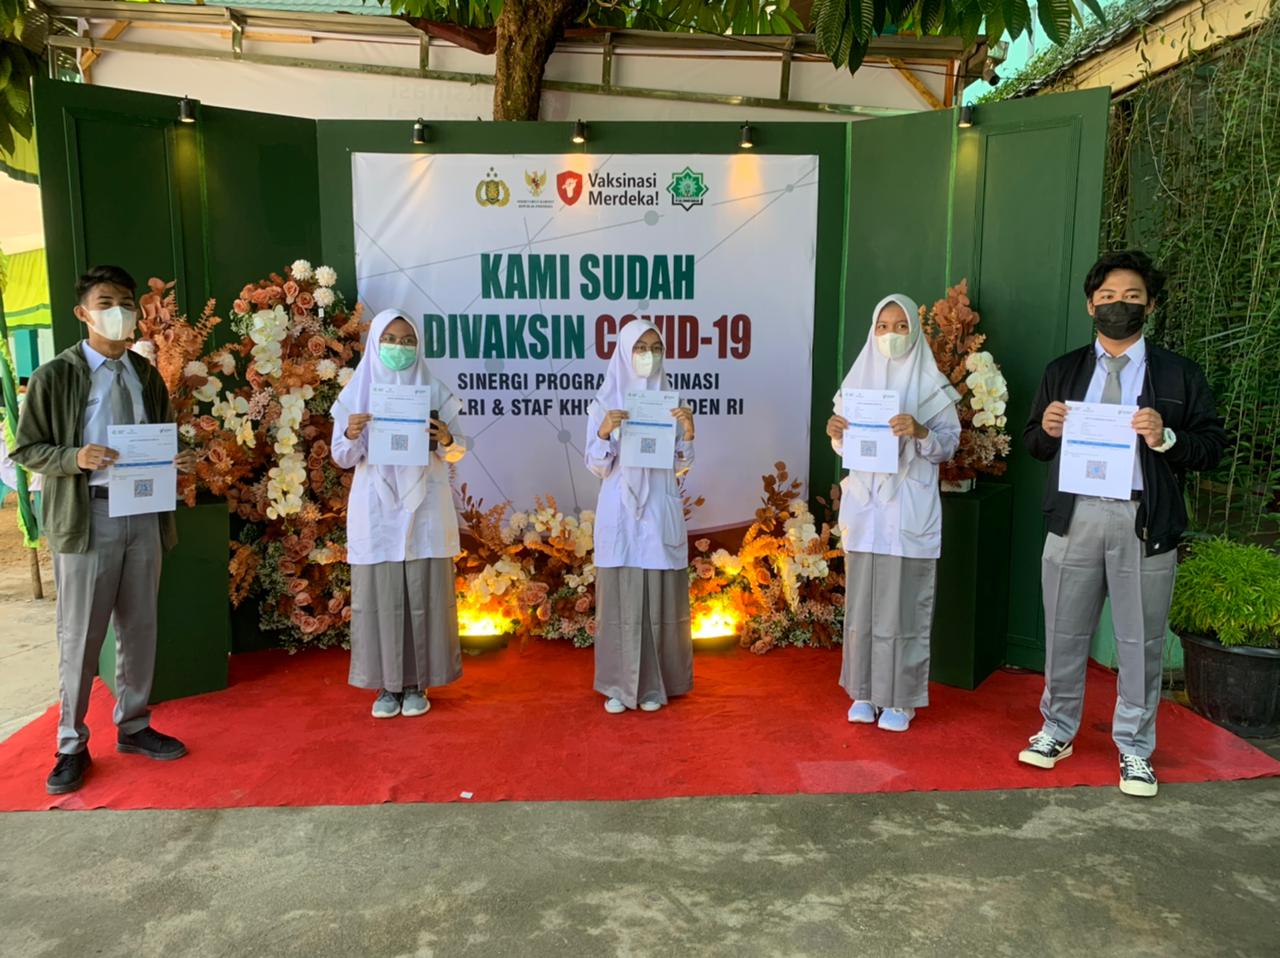 Vaksinasi Merdeka TNI - POLRI di Pondok Pesantren KH Ahmad Dahlan Kuansing